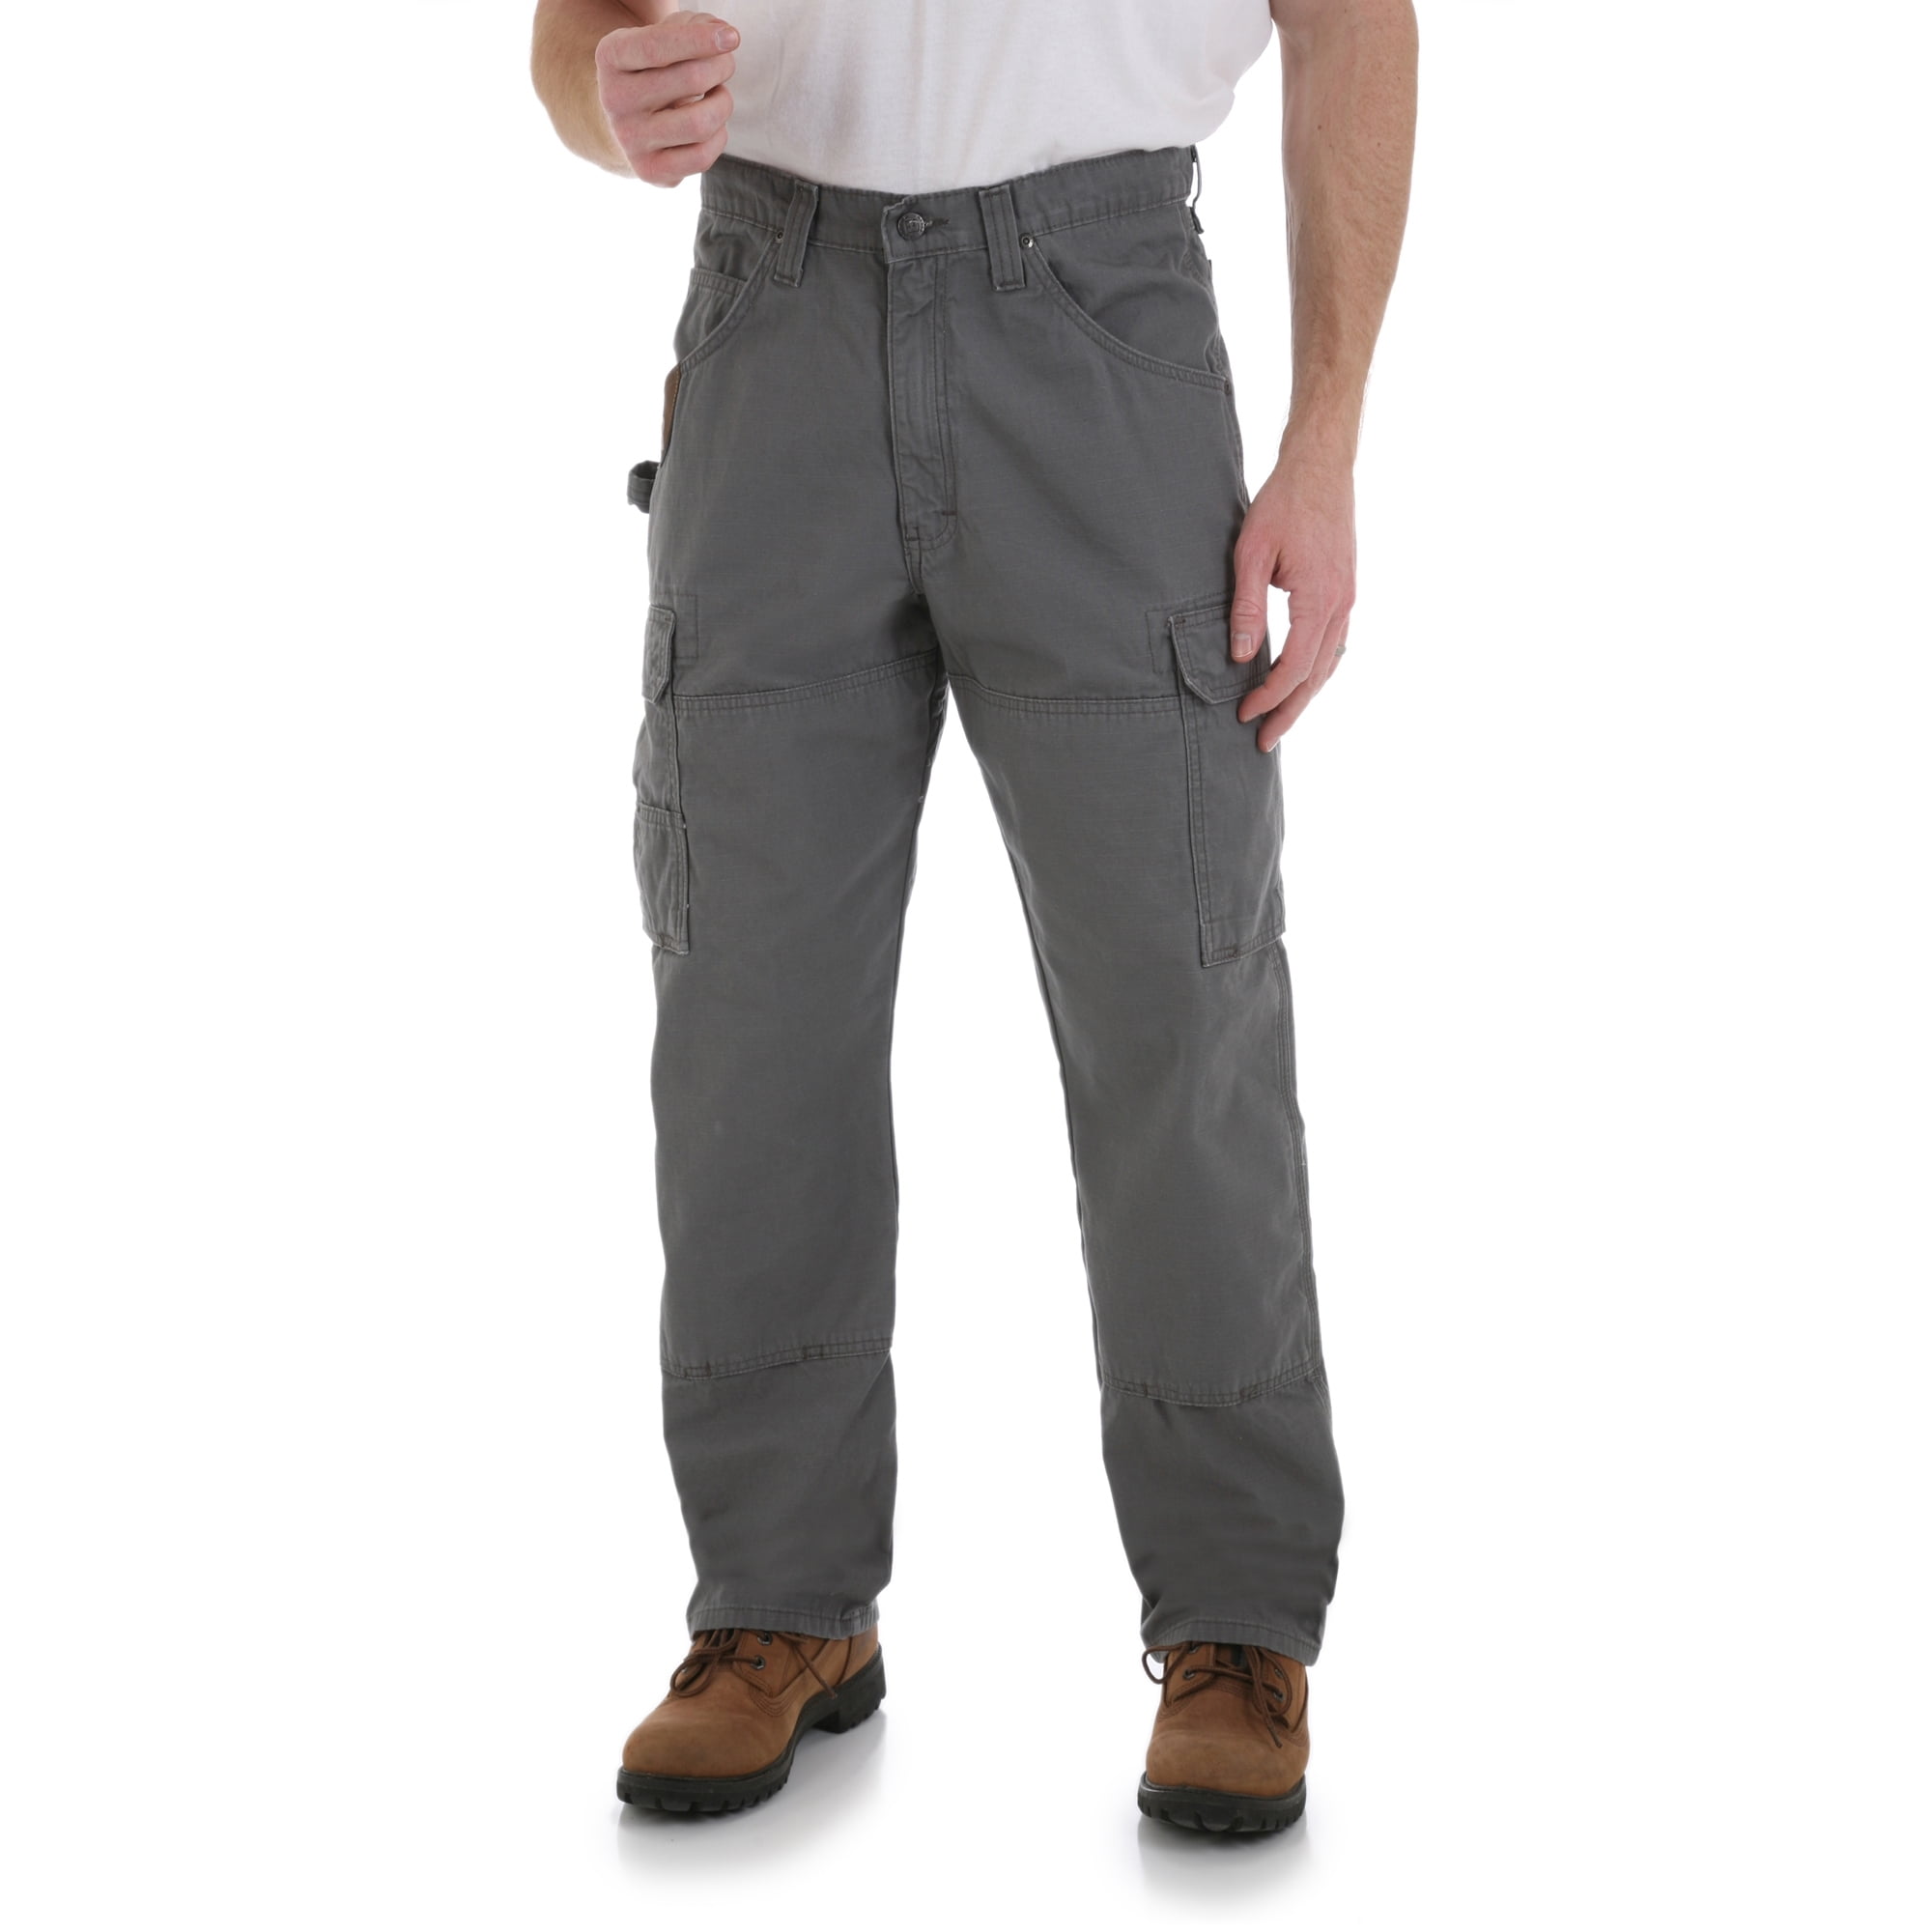 Wrangler Riggs Workwear Ranger Pants, Cotton/Ripstop - Walmart.com